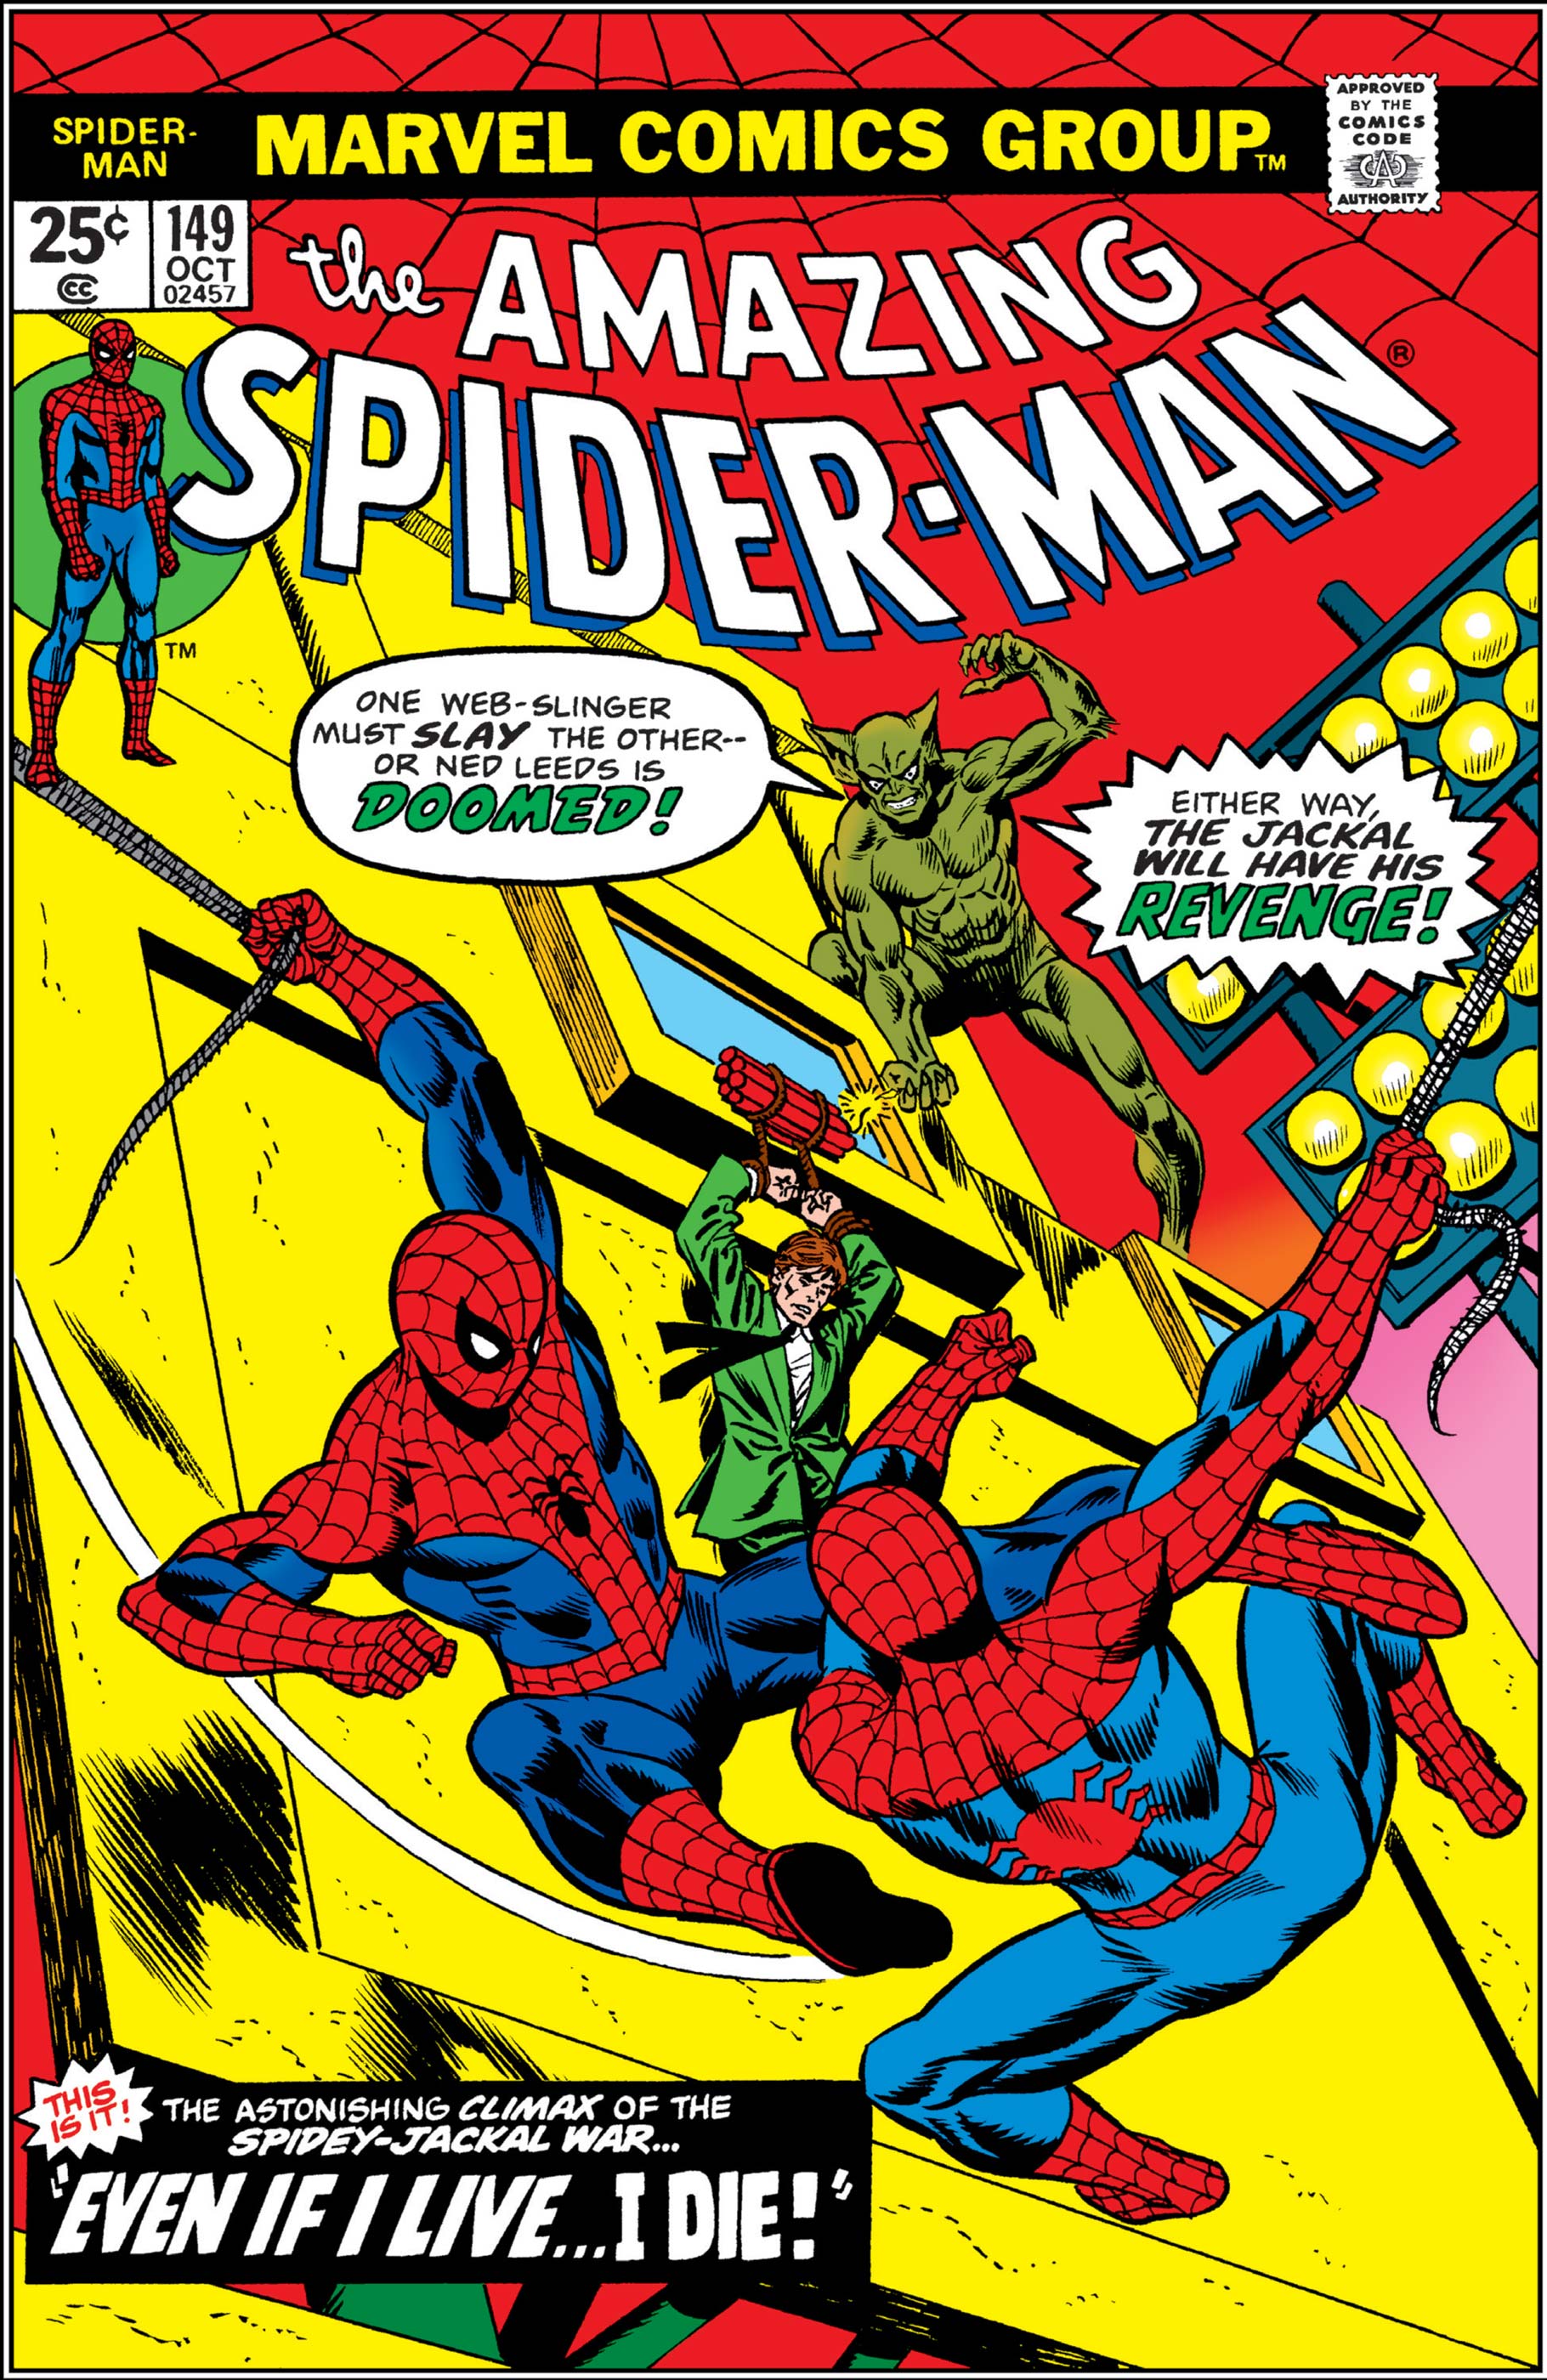 The Amazing Spider-Man (1963) #149